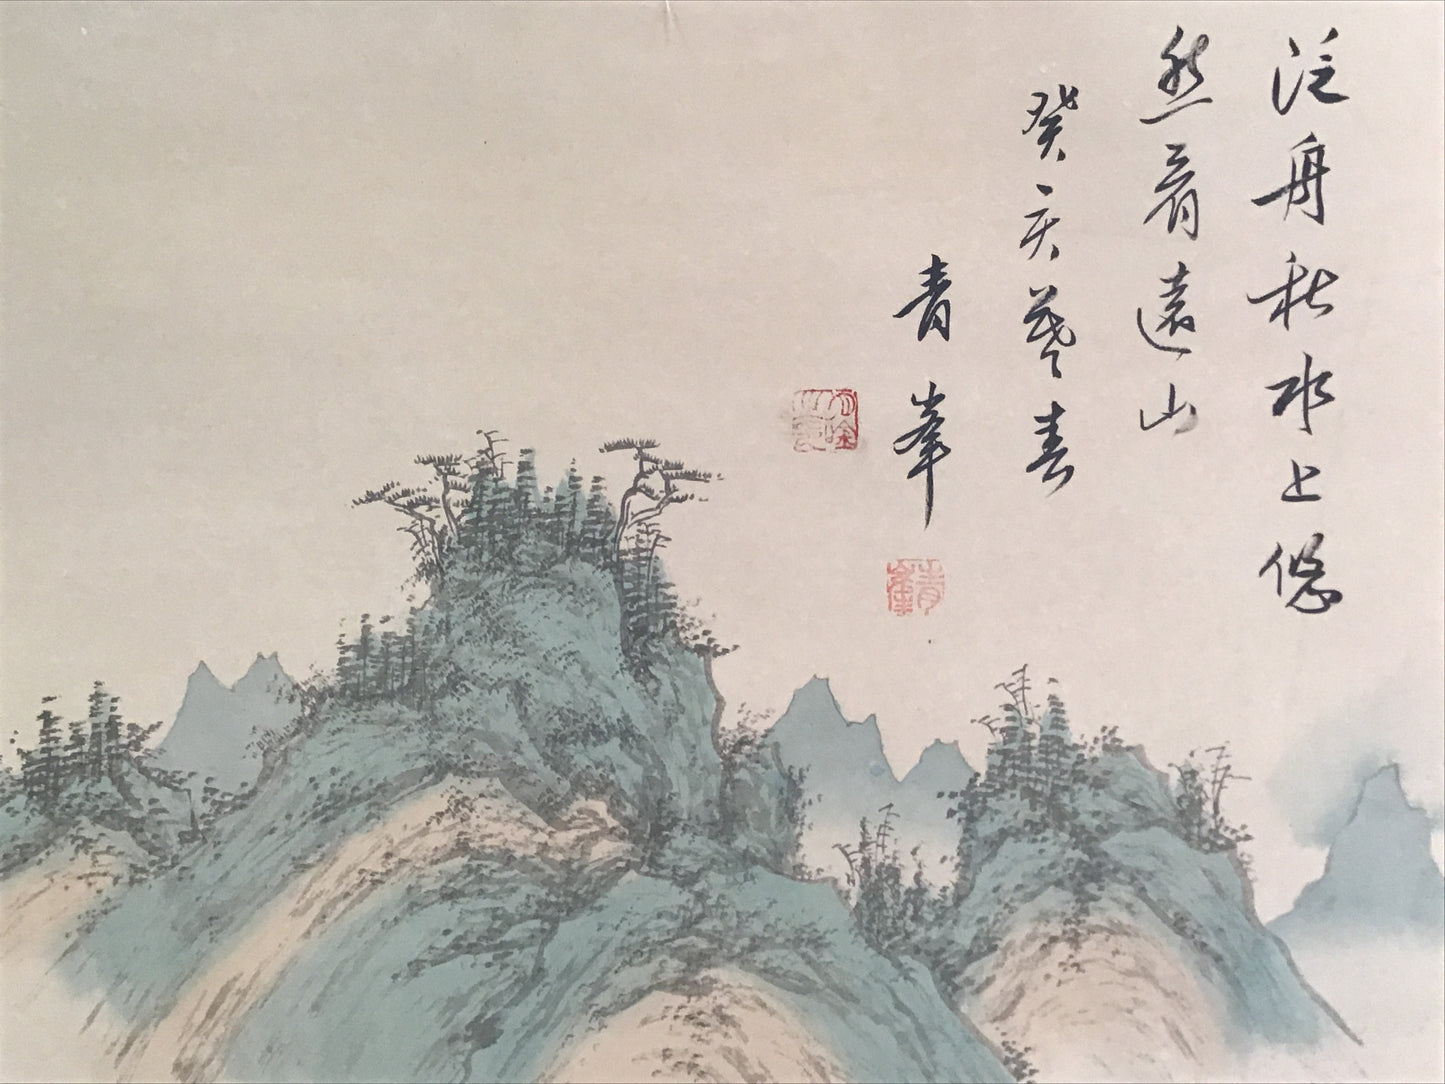 Y2171 KAKEJIKU Landscape signed 170x54cm Japanese hanging scroll interior